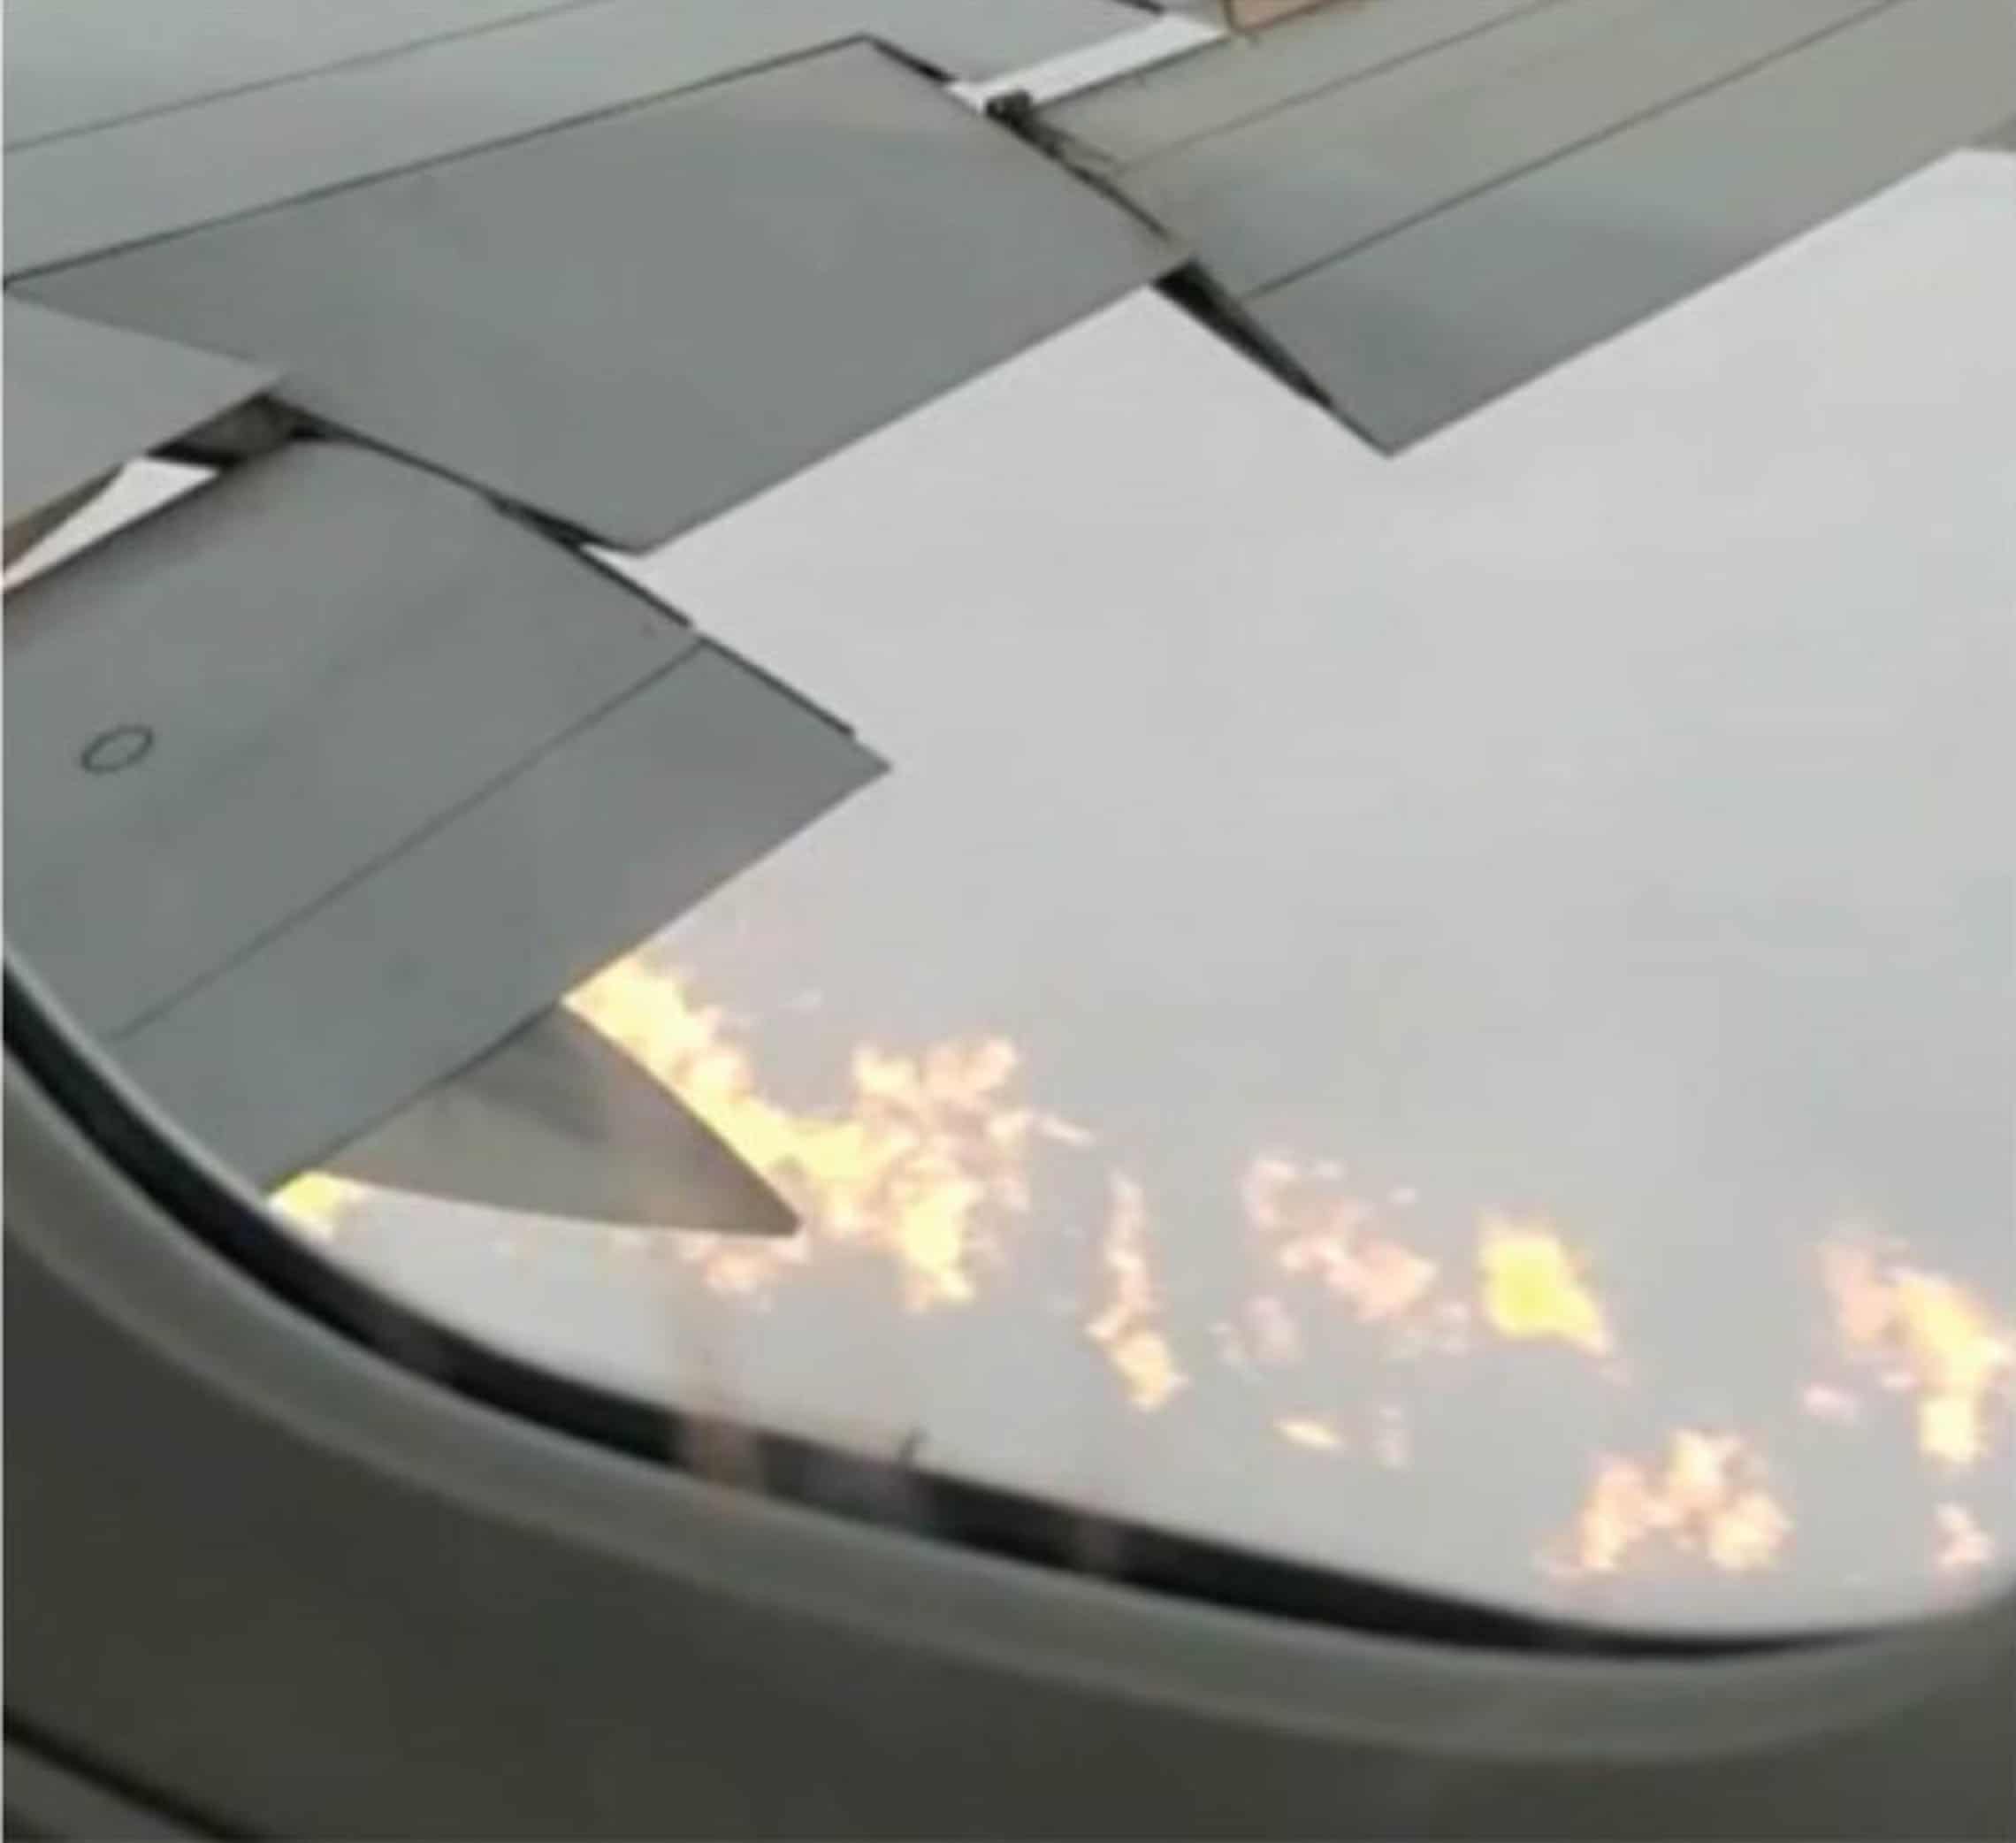 Fire on Boeing plane wing